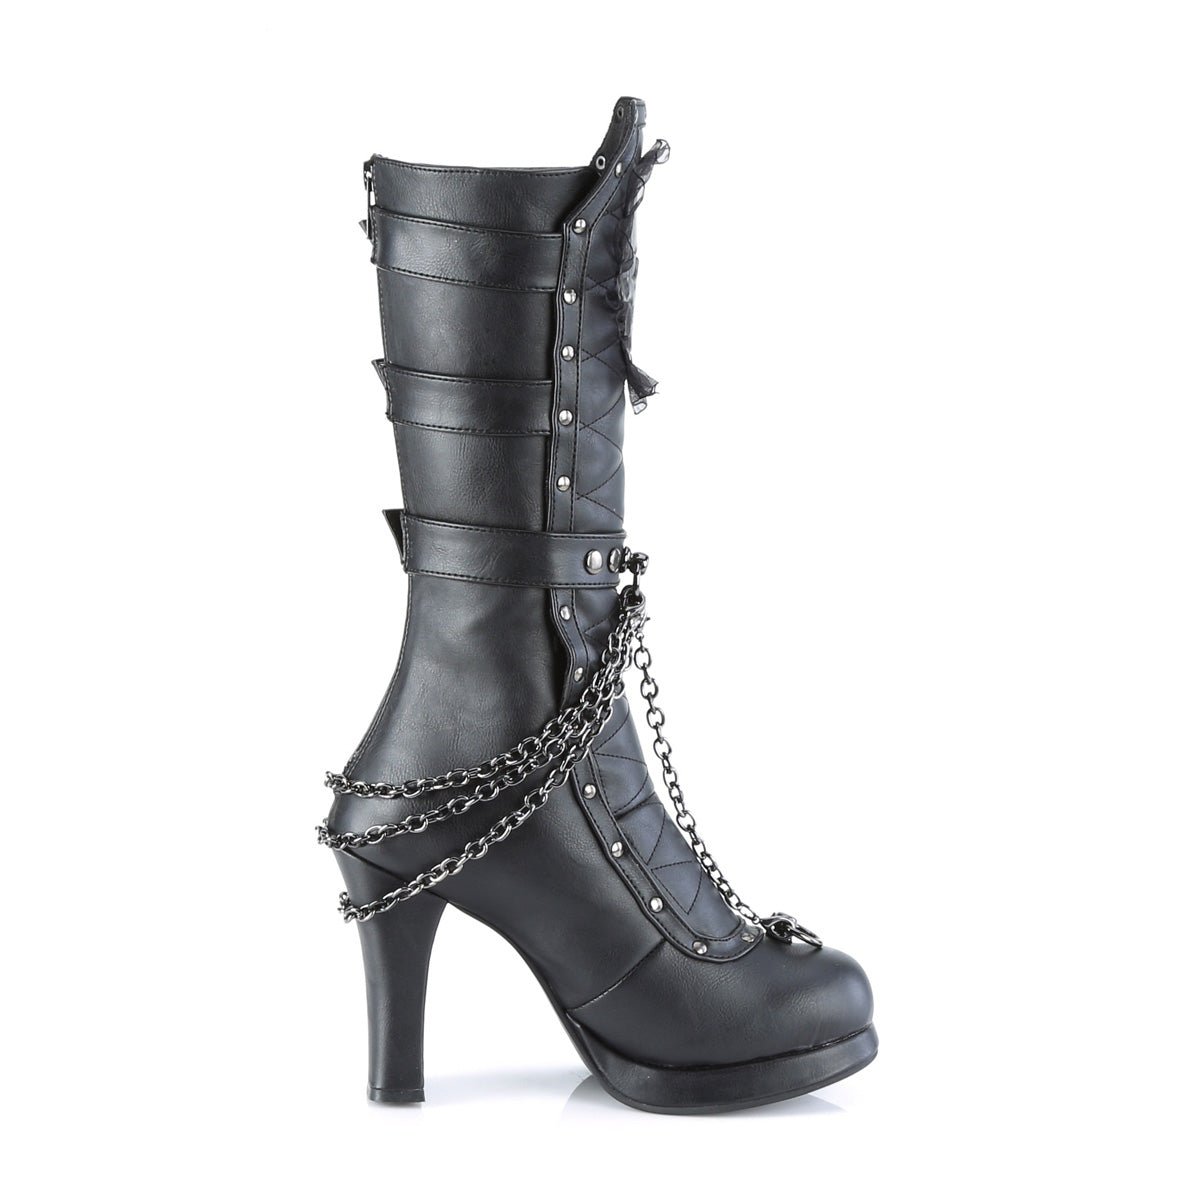 Too Fast | Demonia Crypto 67 | Black Vegan Leather Women's Mid Calf Boots